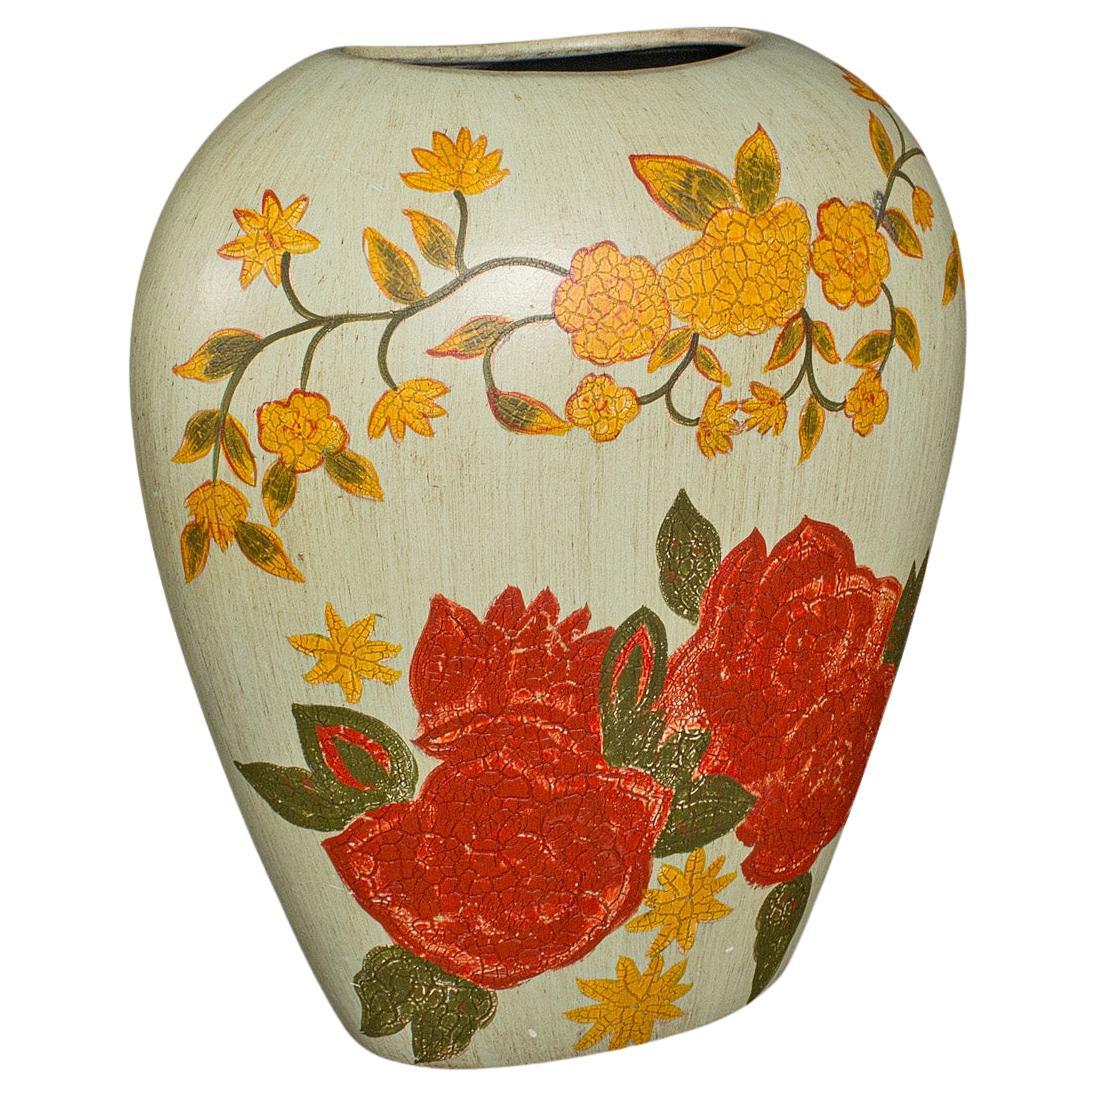 Ovale Vintage-Blumenvase, spanisch, handbemalt, Keramik, Pflanzgefäß, Mid-Century